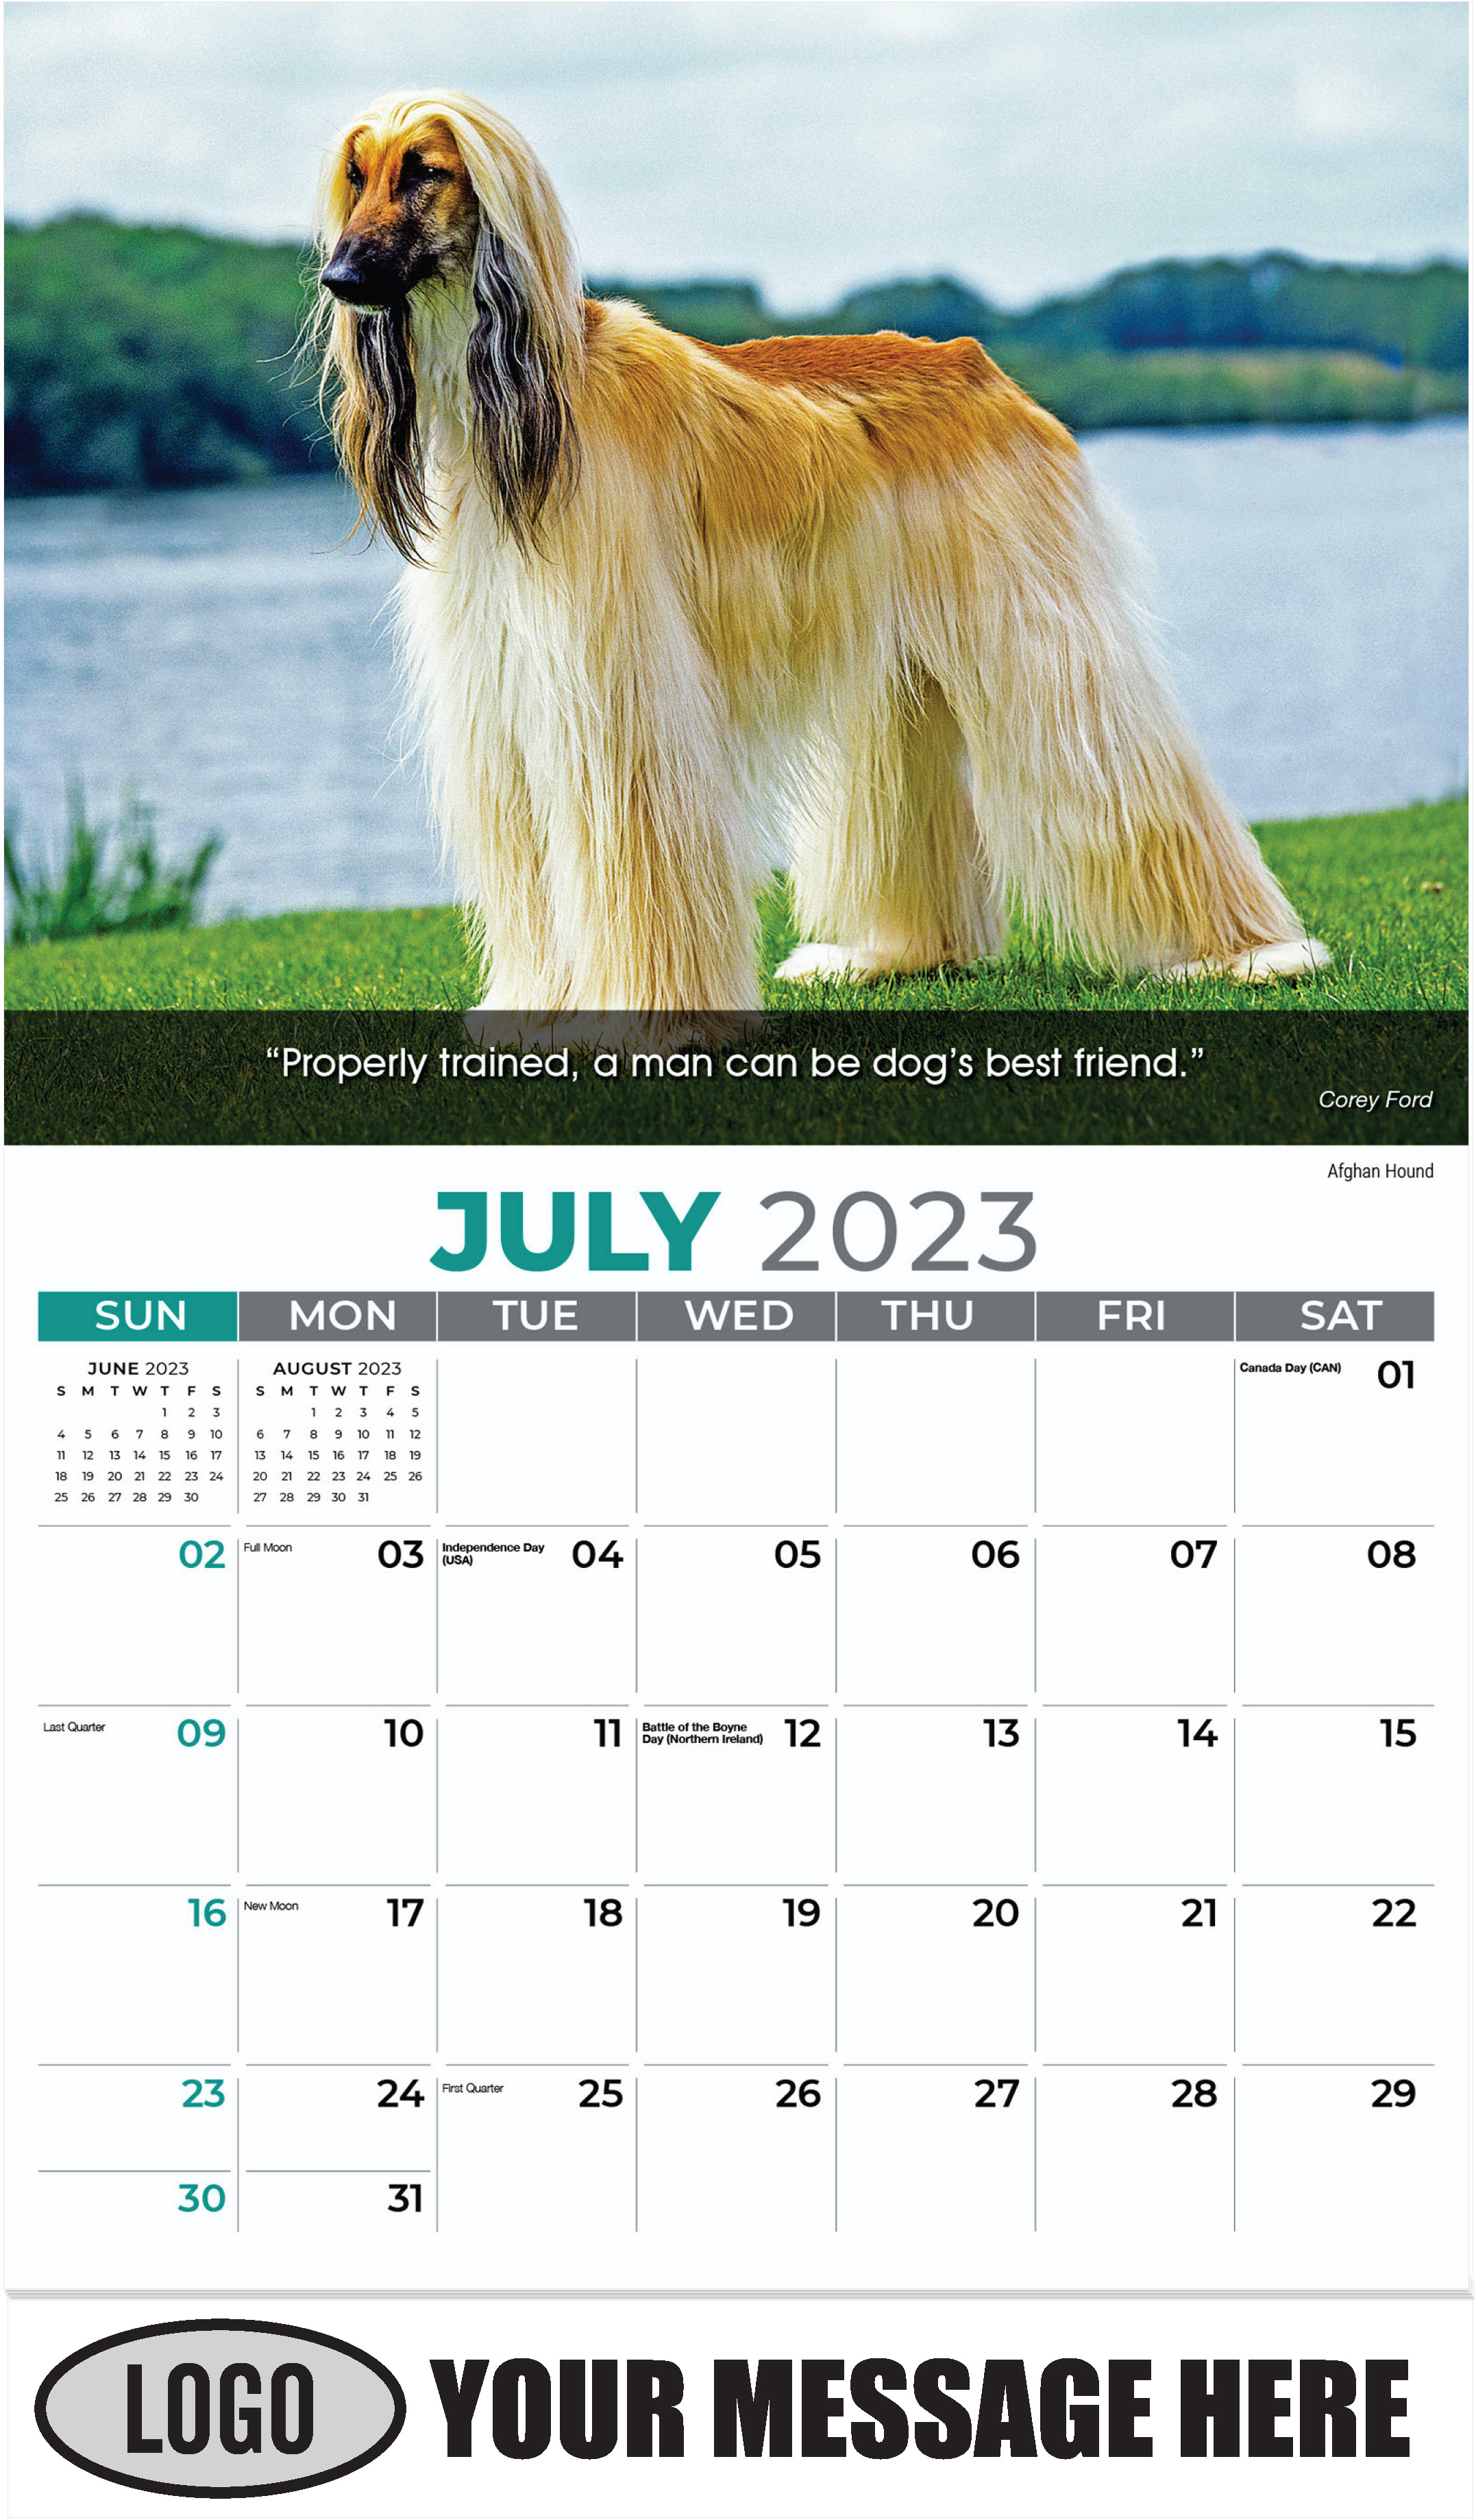 Afghan Hound - July - Dogs, ''Man's Best Friends'' 2023 Promotional Calendar